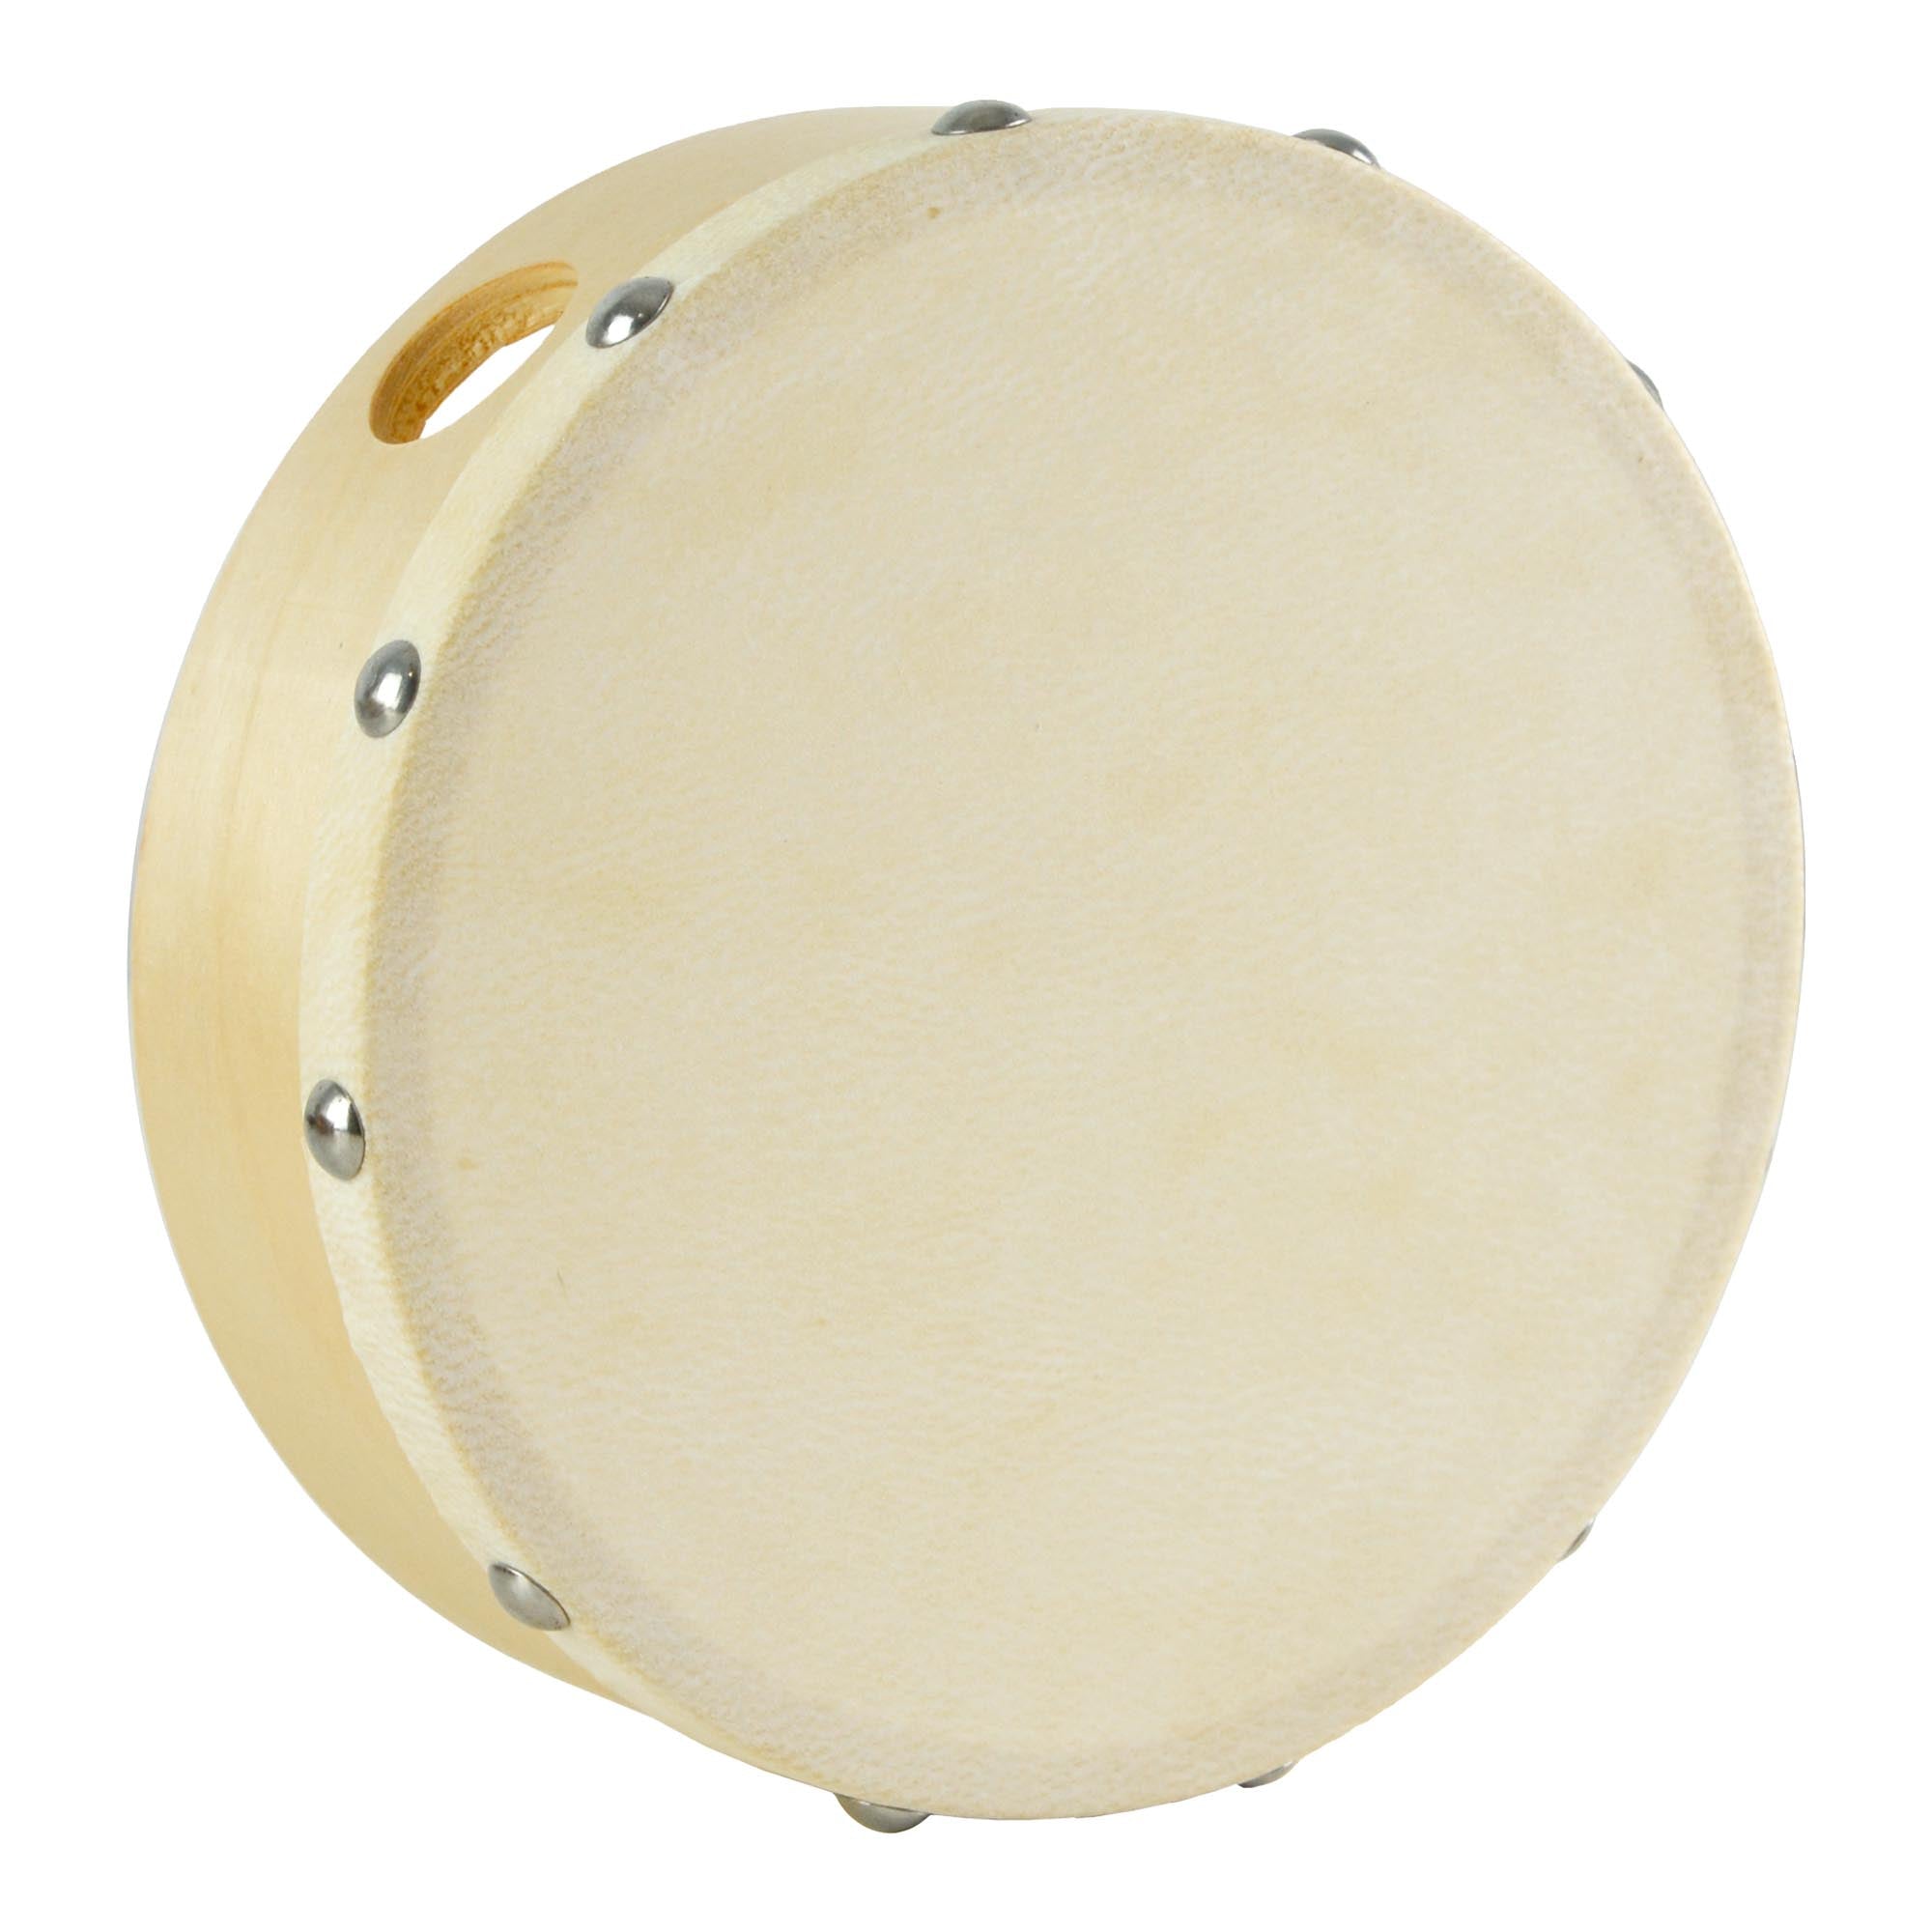 A-Star Pre-tuned Hand Drum - 6 Inch/15cm